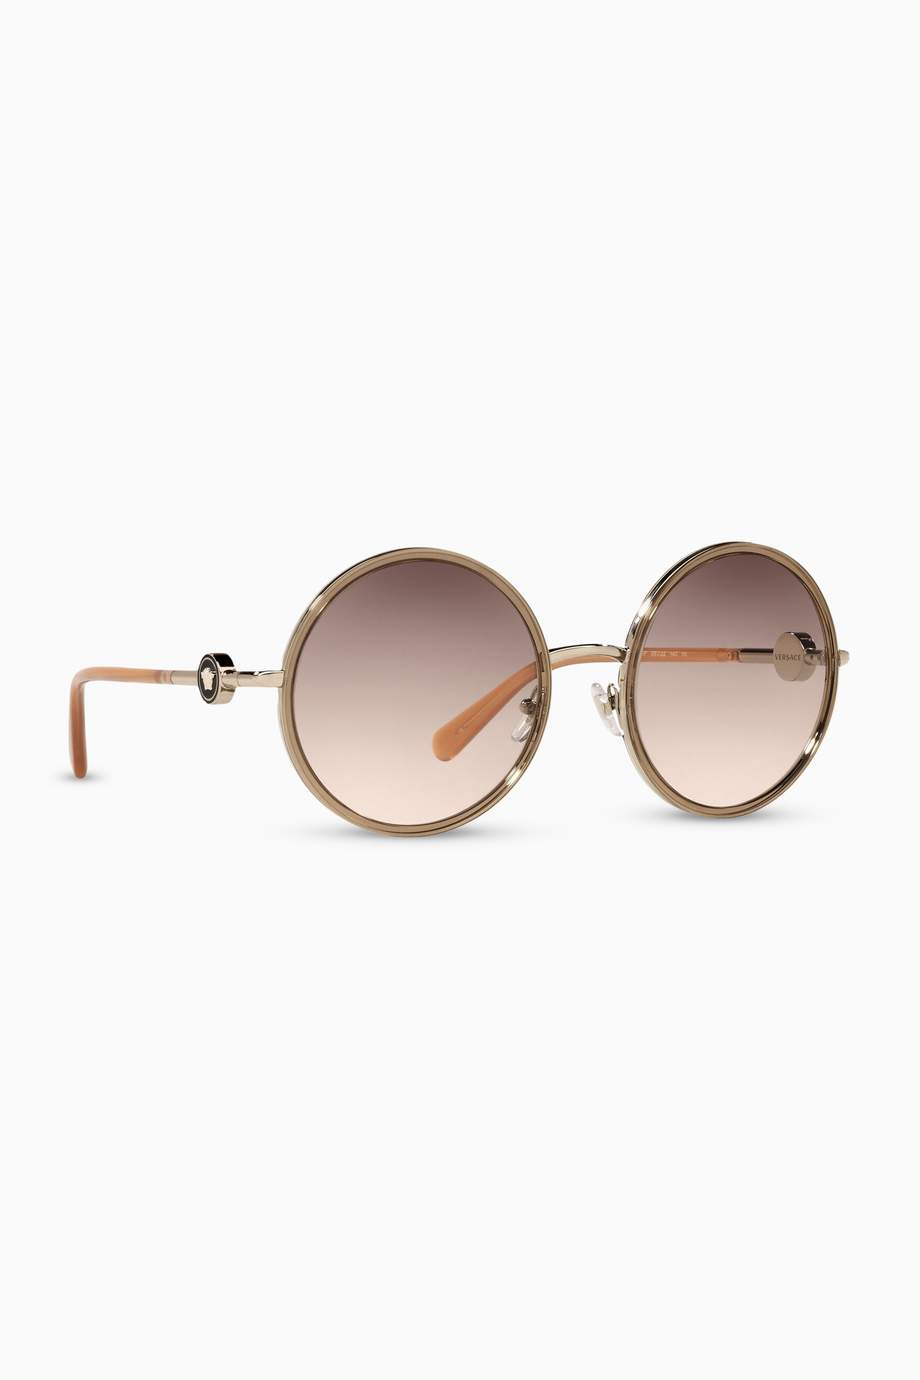 Shop Versace Brown Round Sunglasses With Medusa Medallion For Women Ounass Uae 